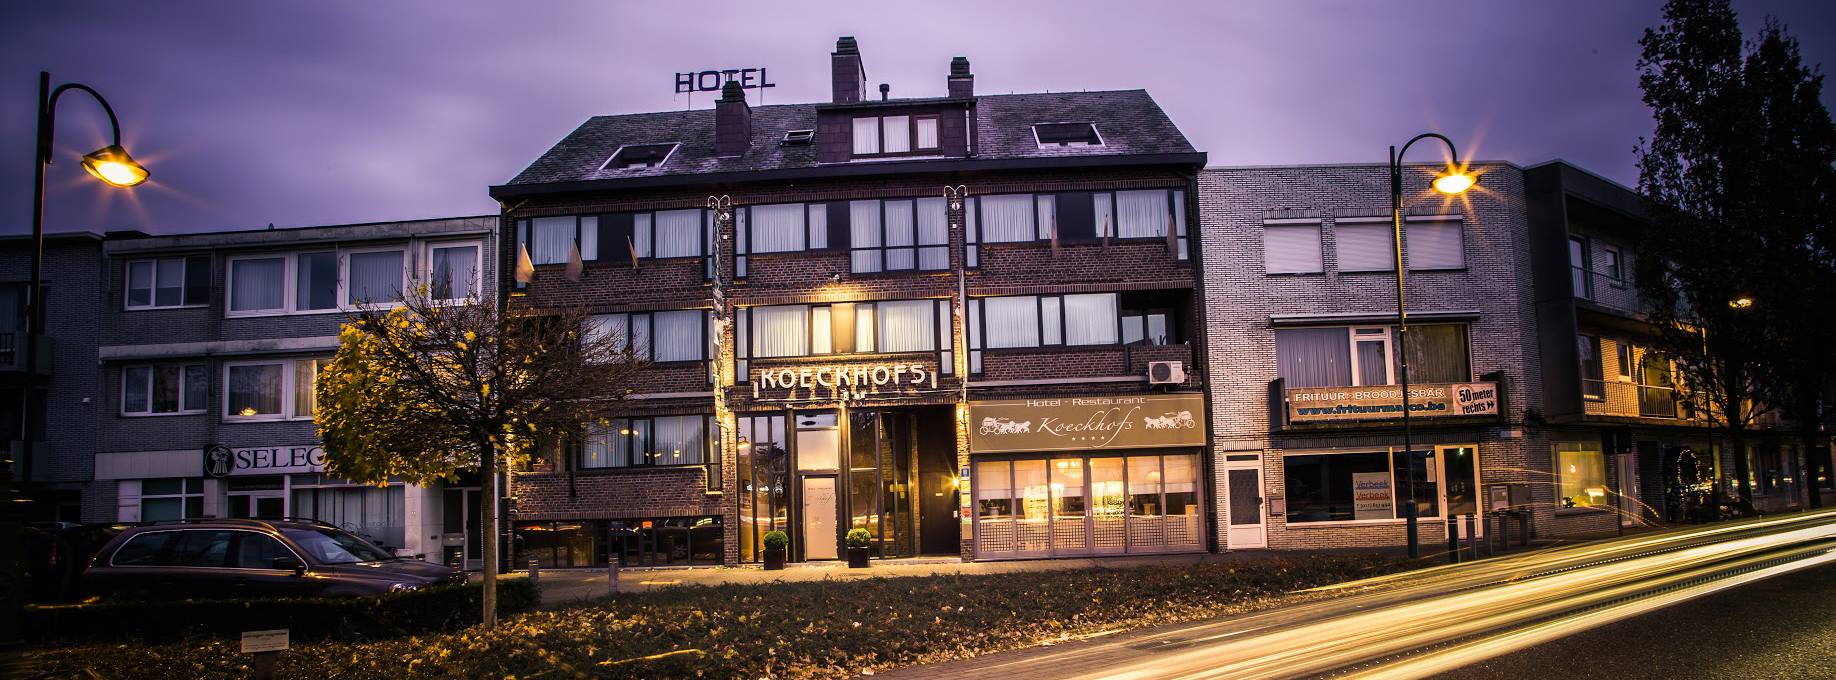 Hotel Koeckhofs